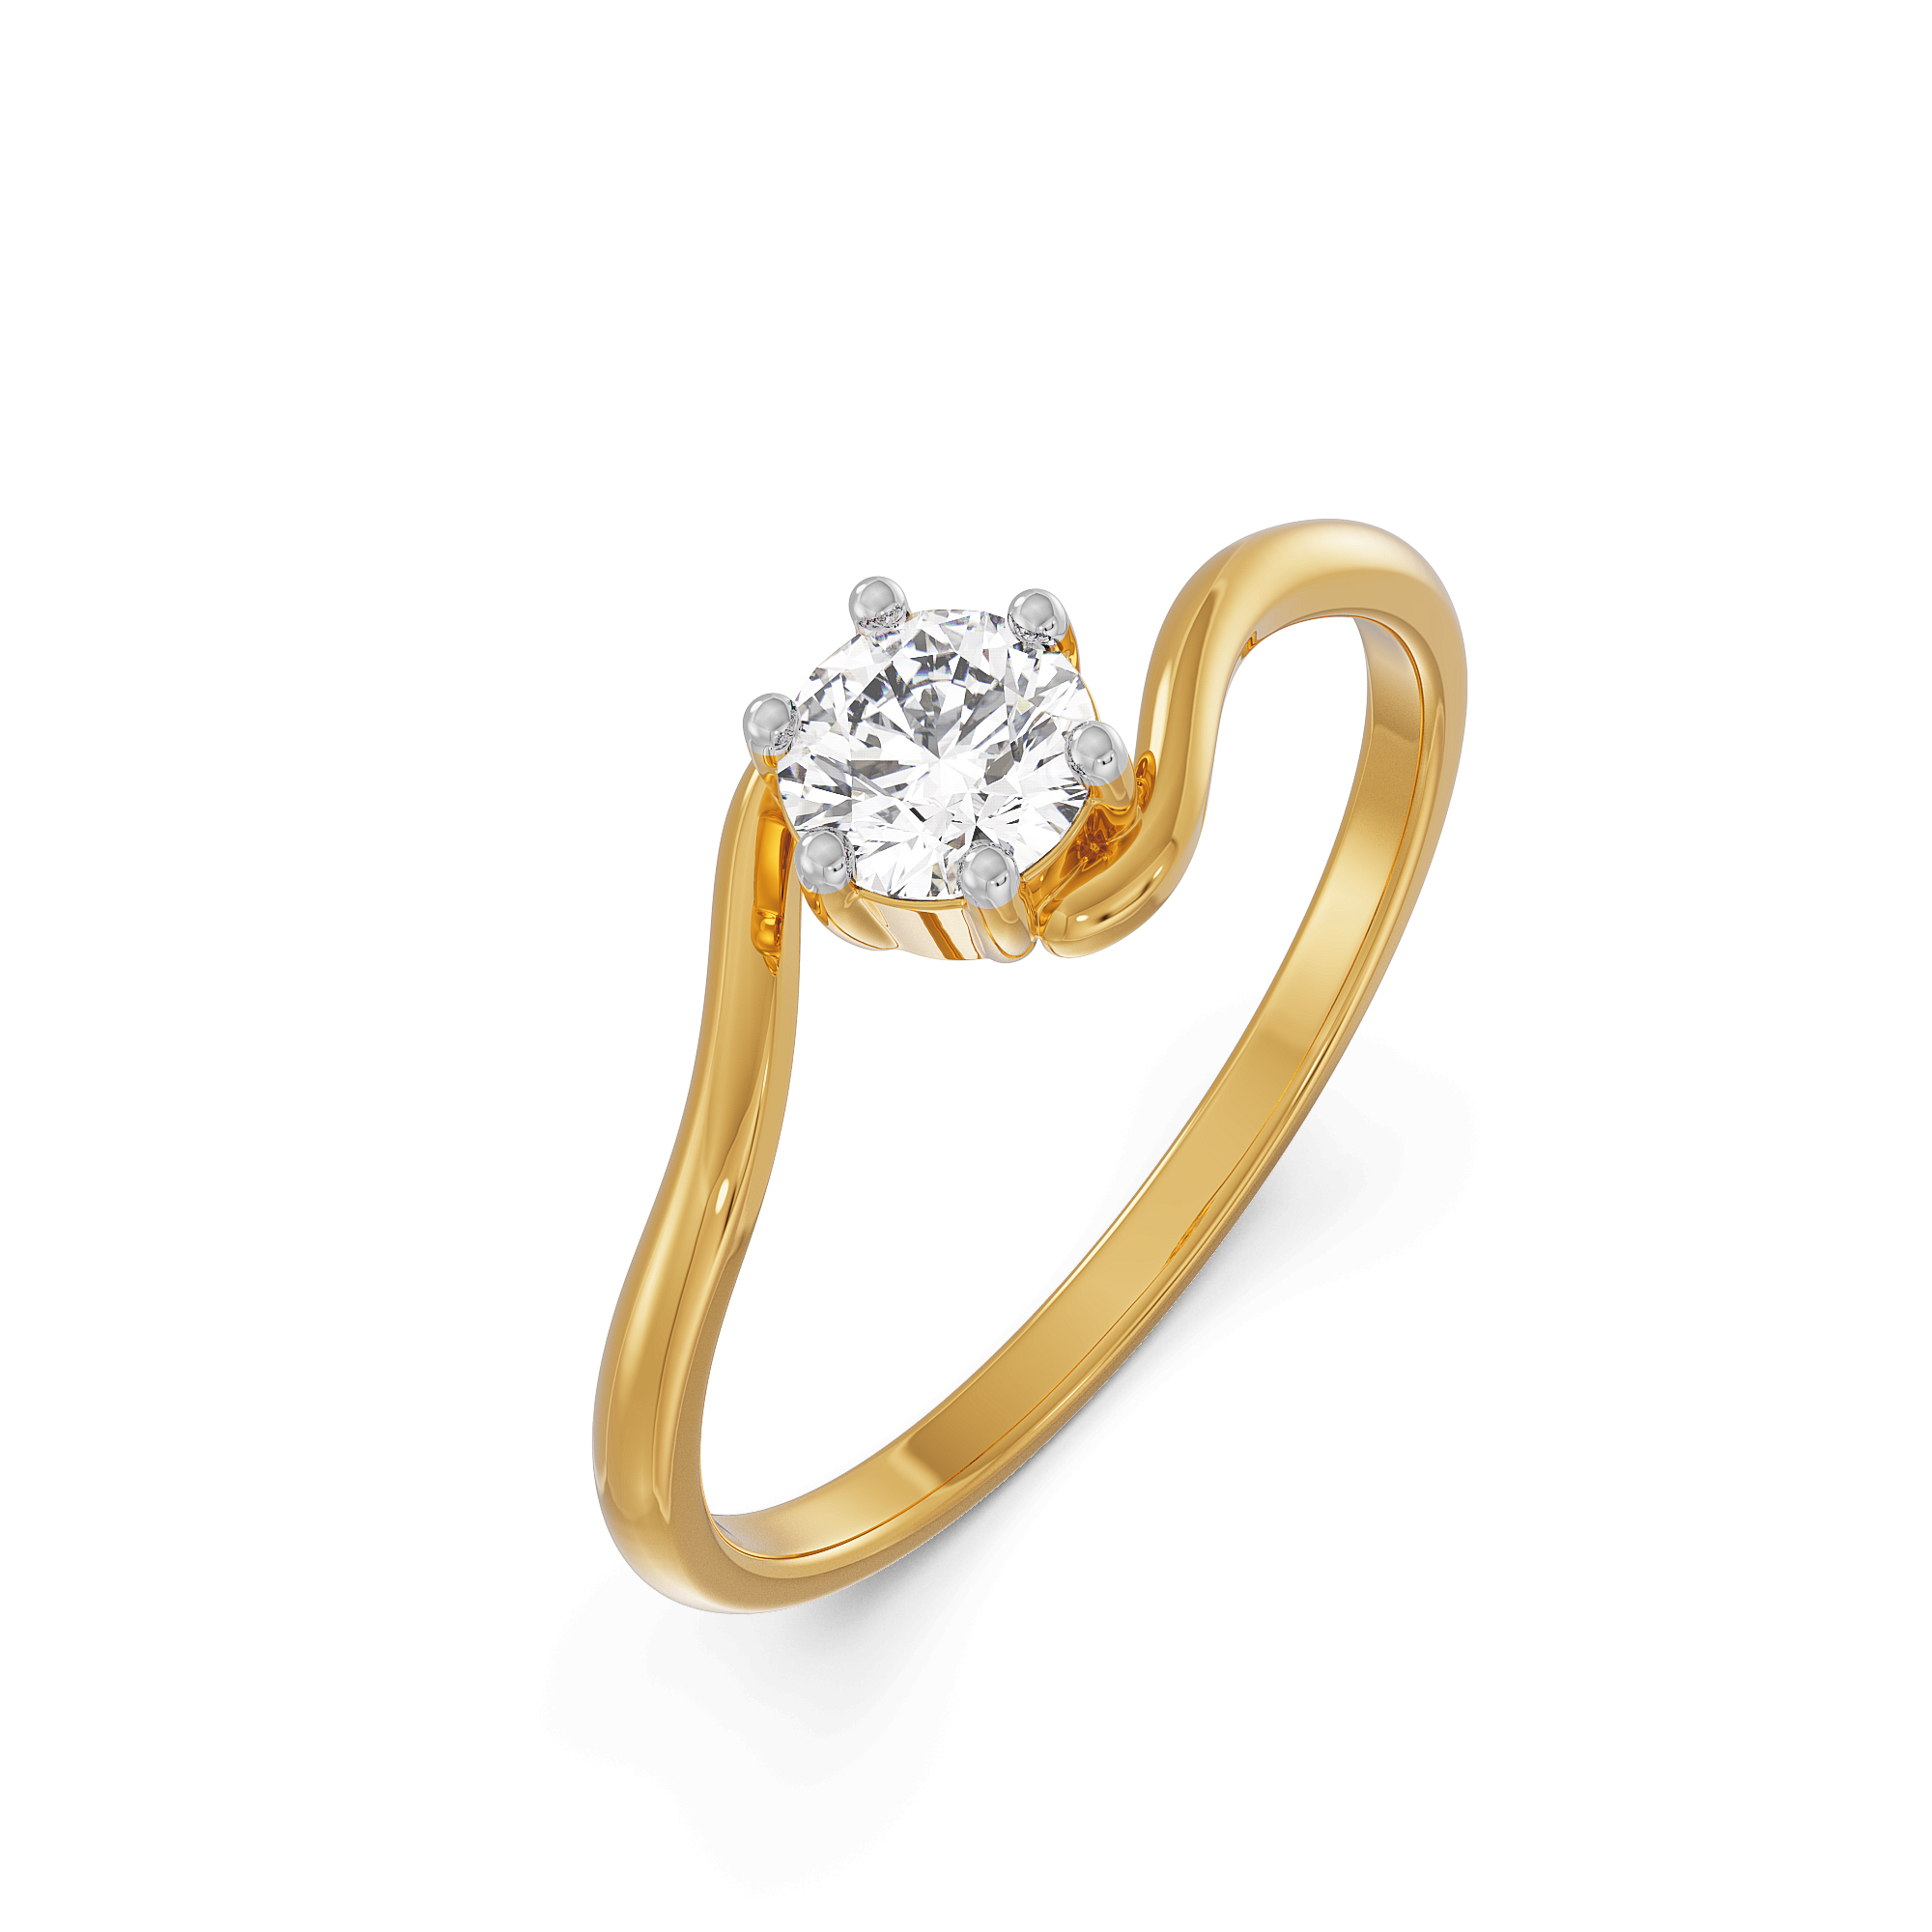 Round Solitaire Diamond Engagement Ring Thin Band 14K Yellow Gold 1.83 CT |  eBay